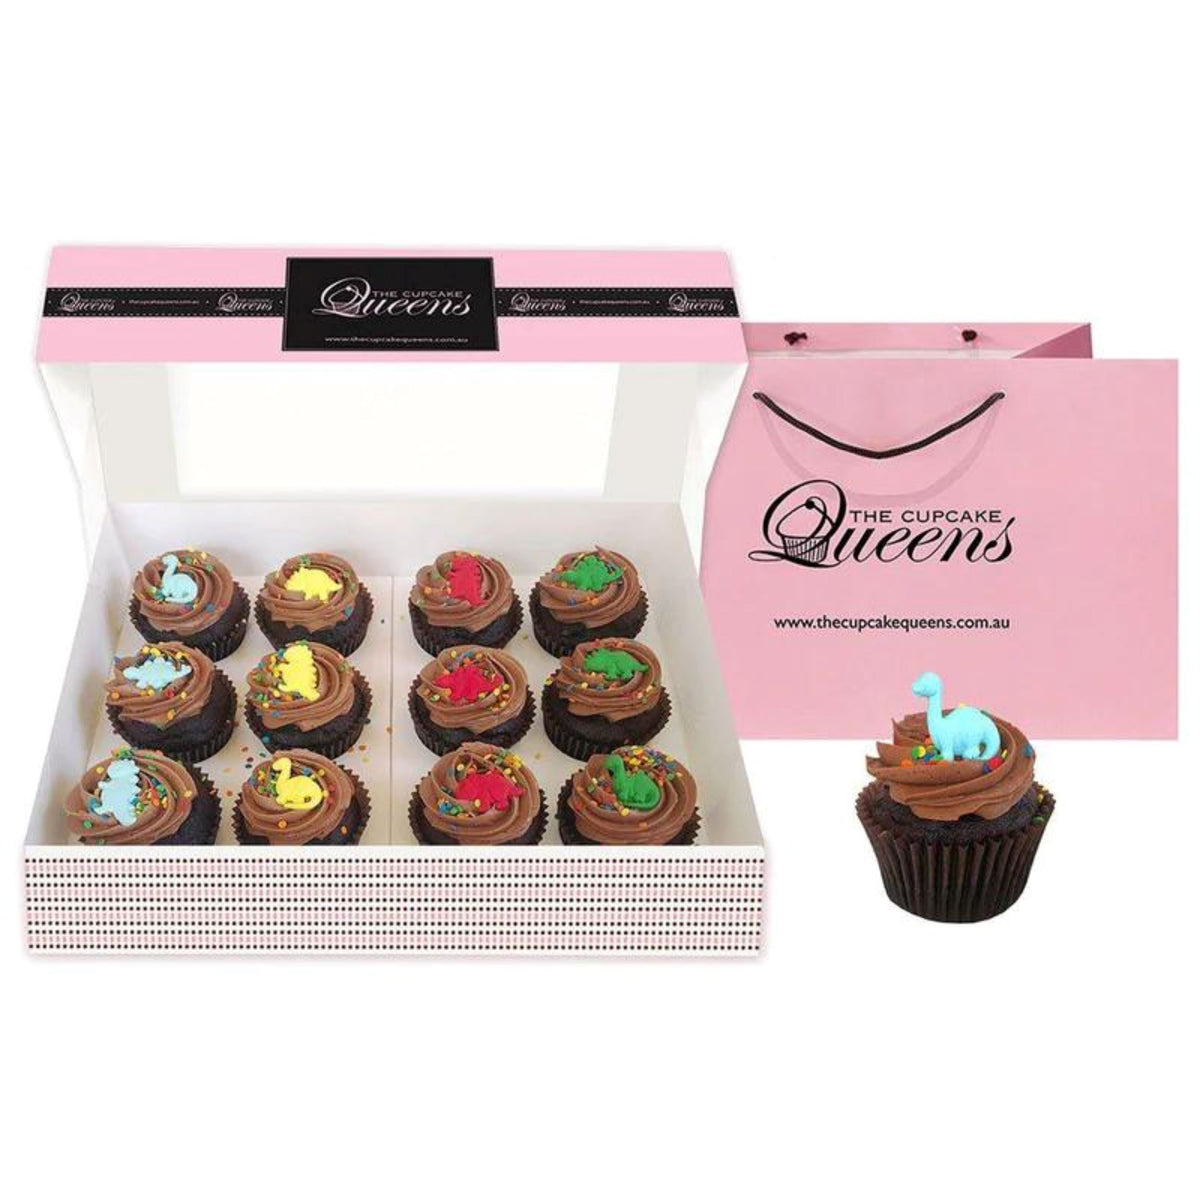 Dinosaur Chocolate Gift Box Cupcakes The Cupcake Queens 